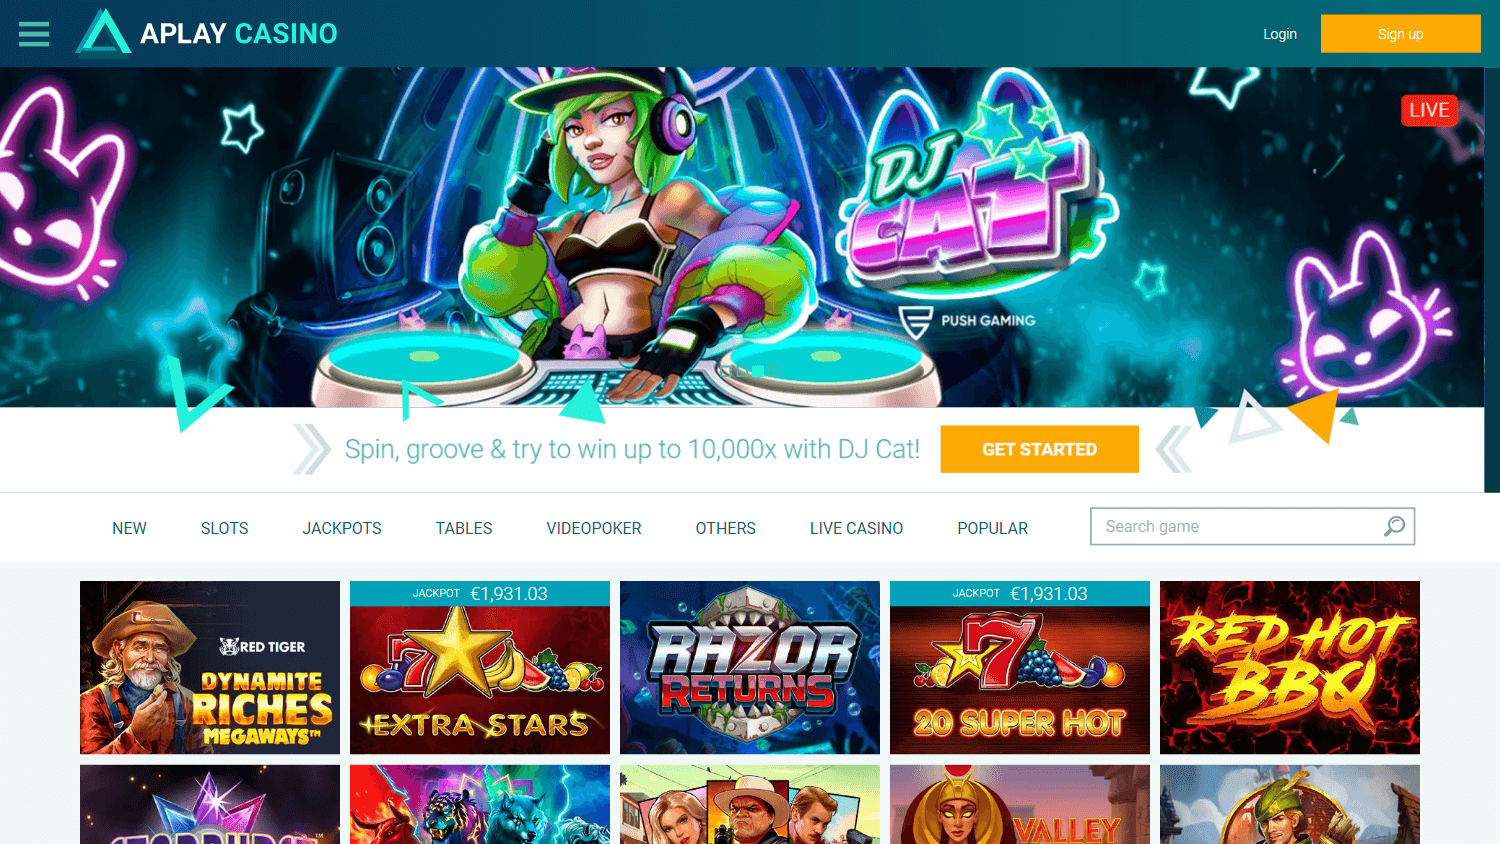 aplay_casino_homepage_desktop